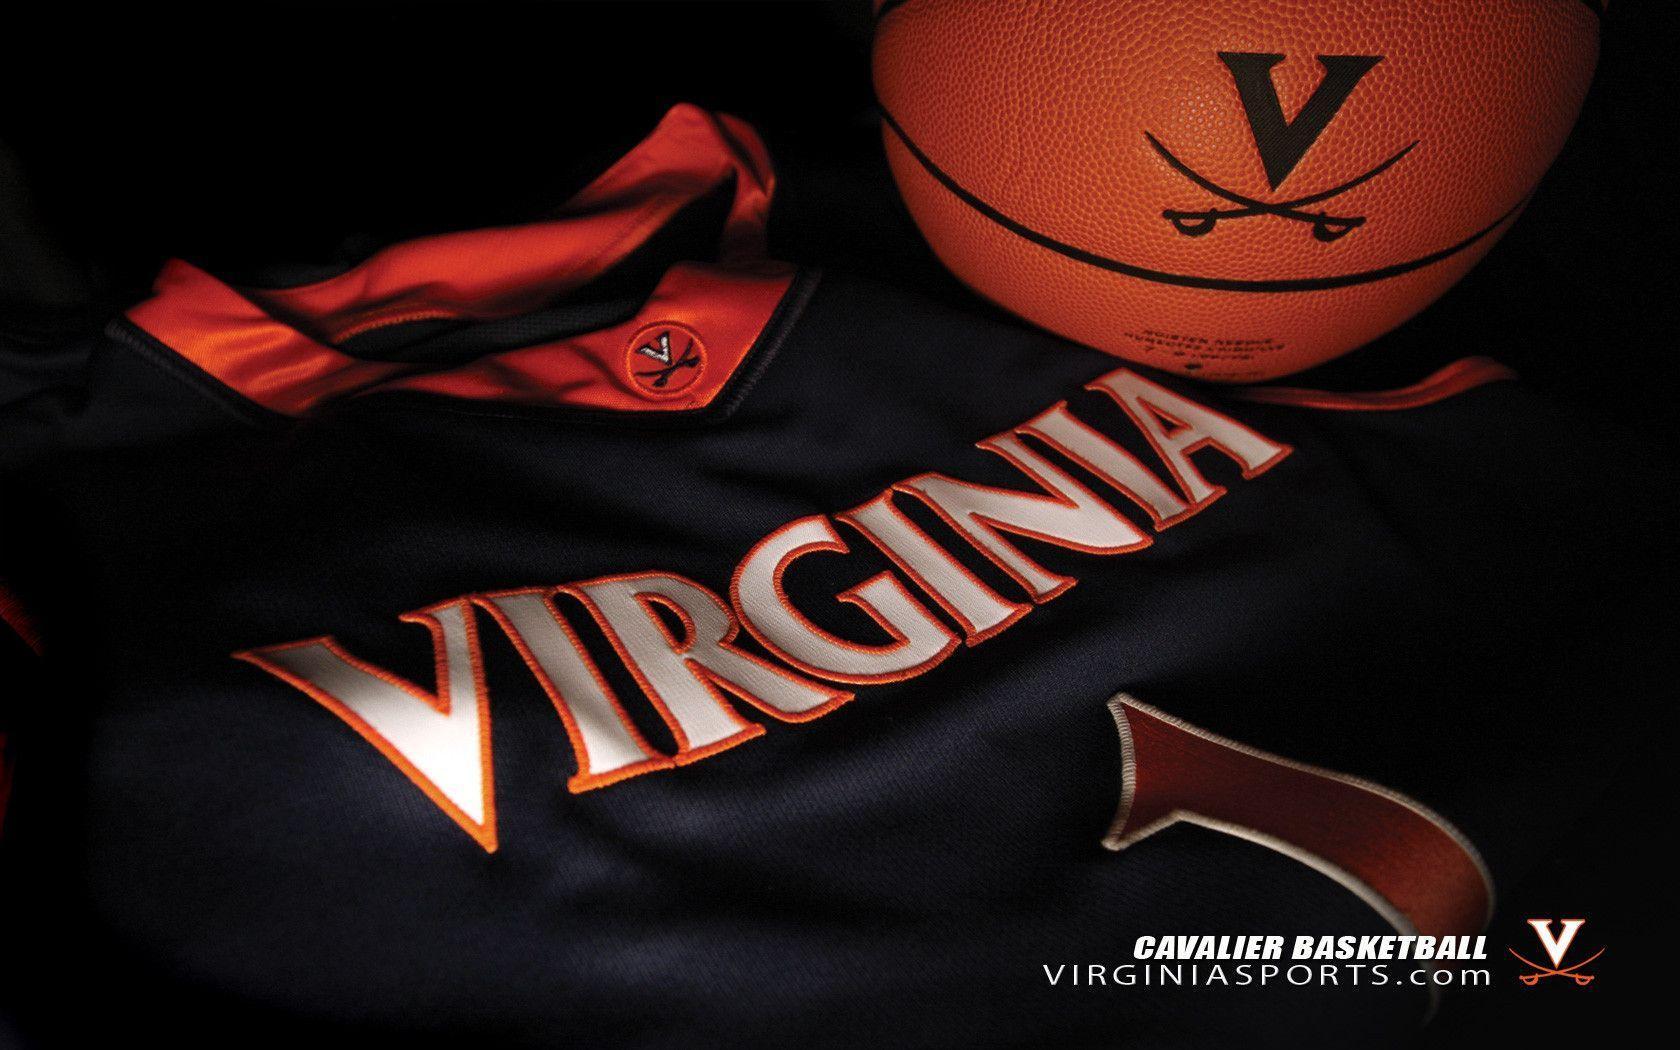 VIRGINIASPORTS.COM University of Virginia Official Athletic